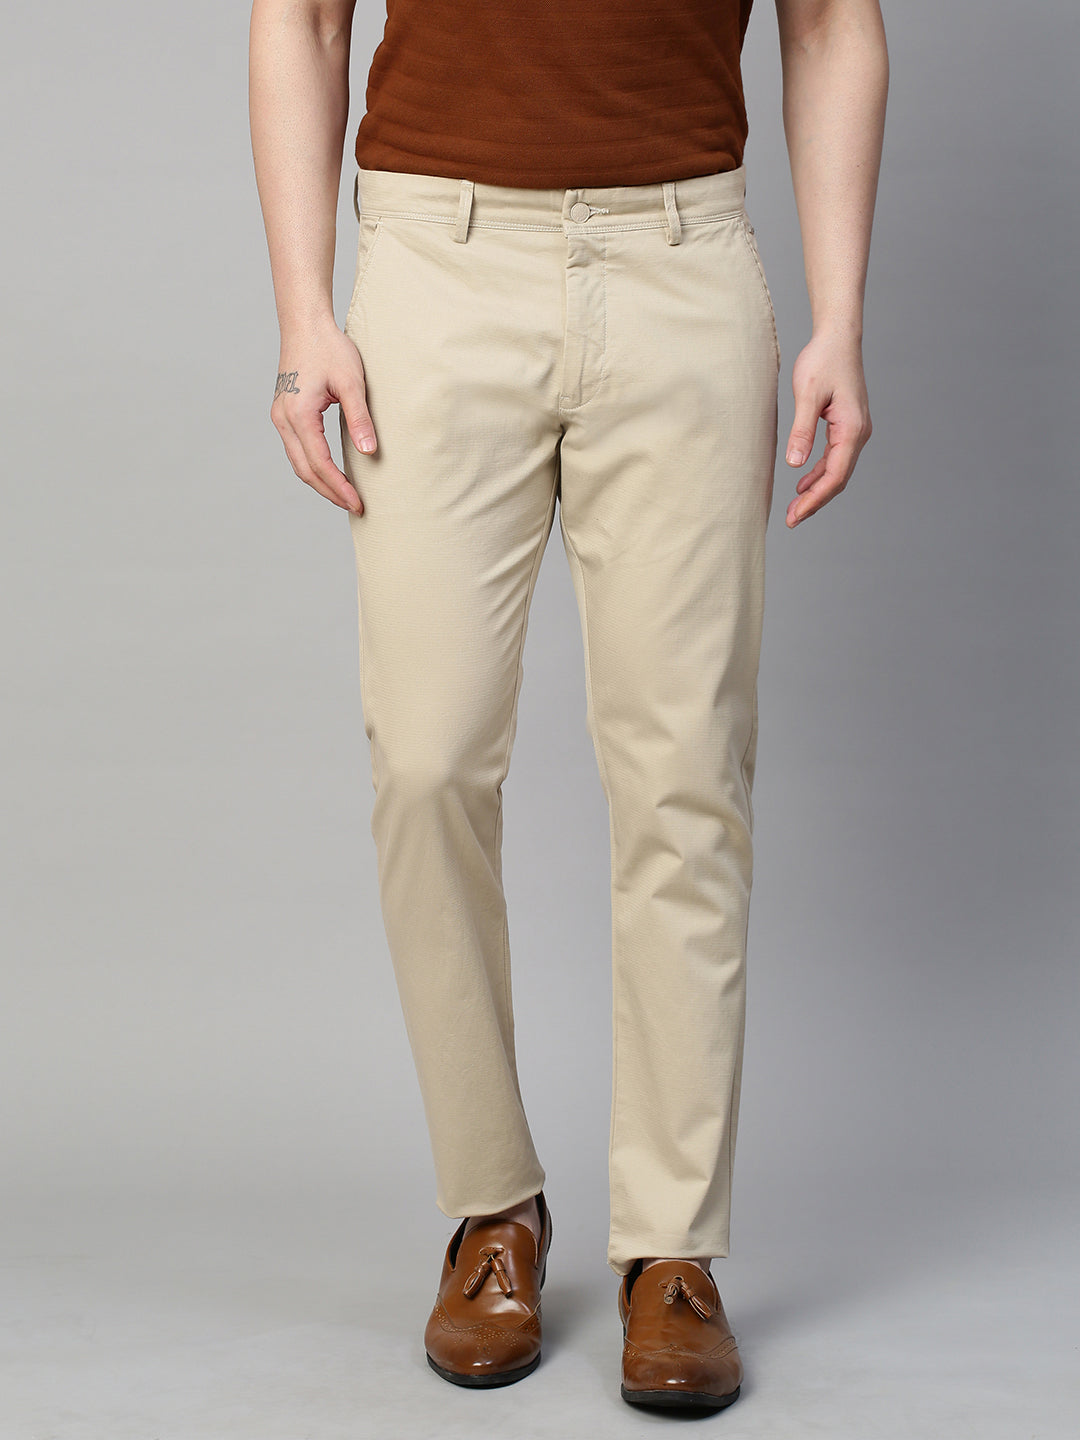 Genips Men's Cream Cotton Stretch Caribbean Slim Fit Solid Trousers